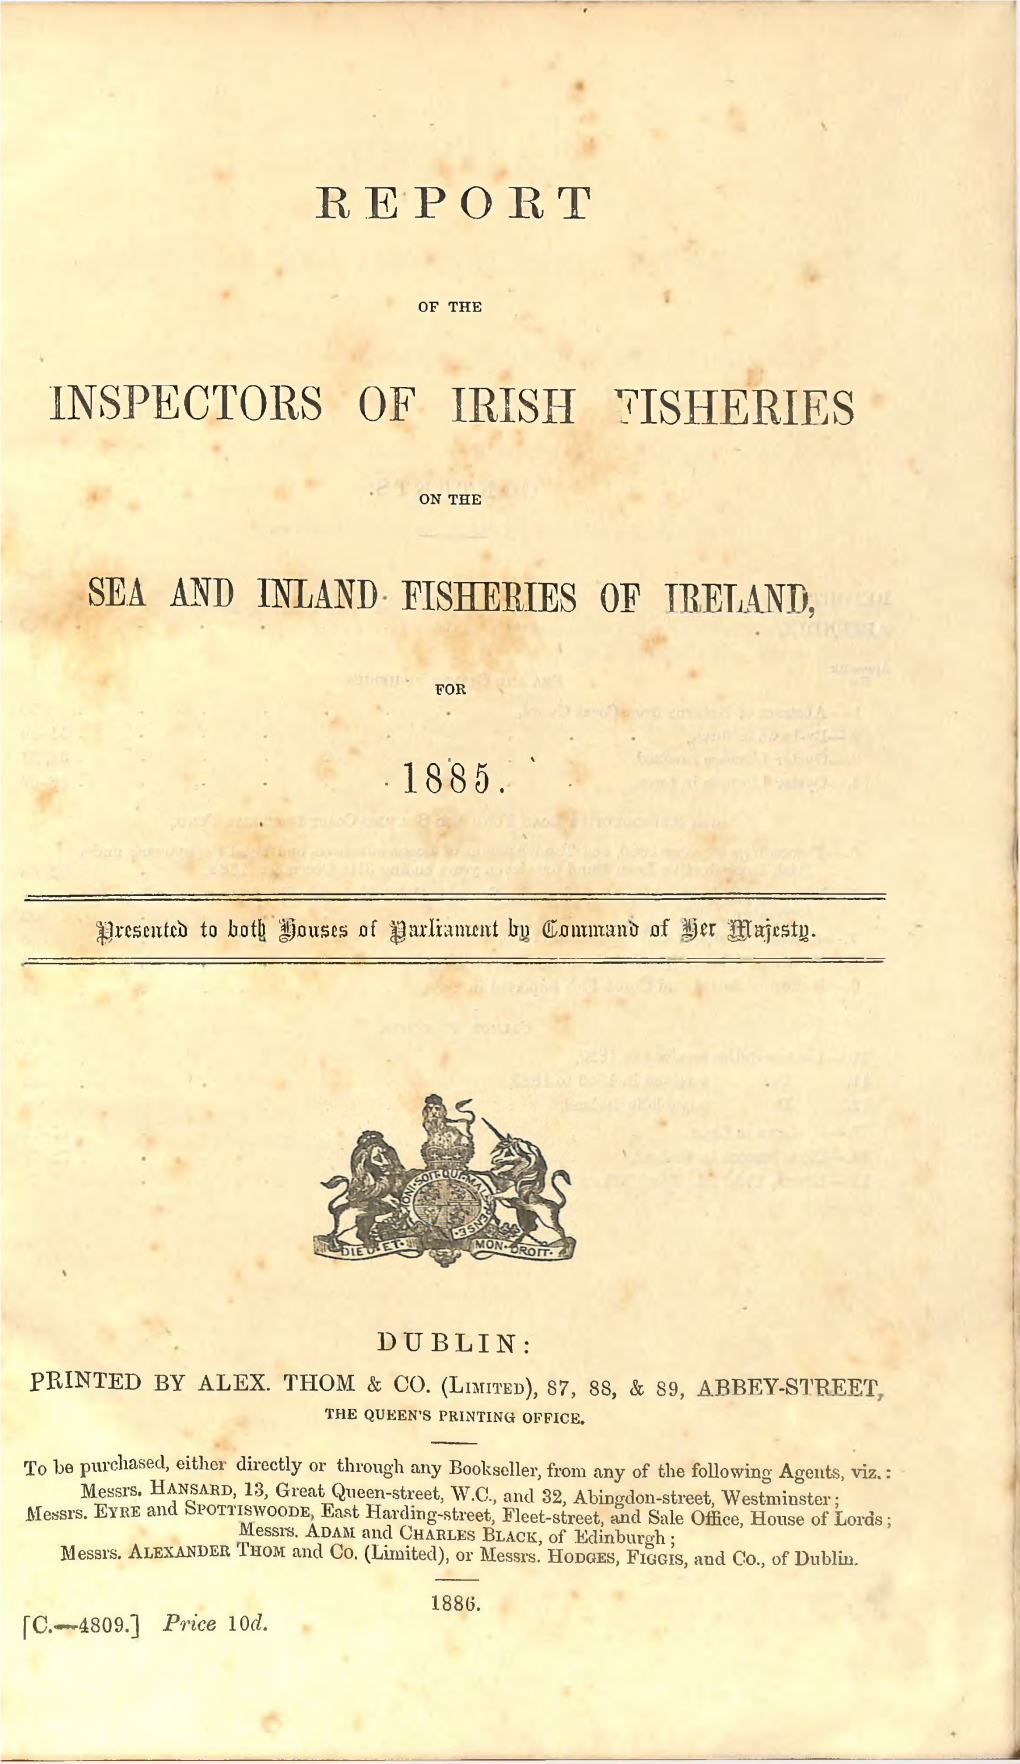 Inspectors of Irish Fisheries